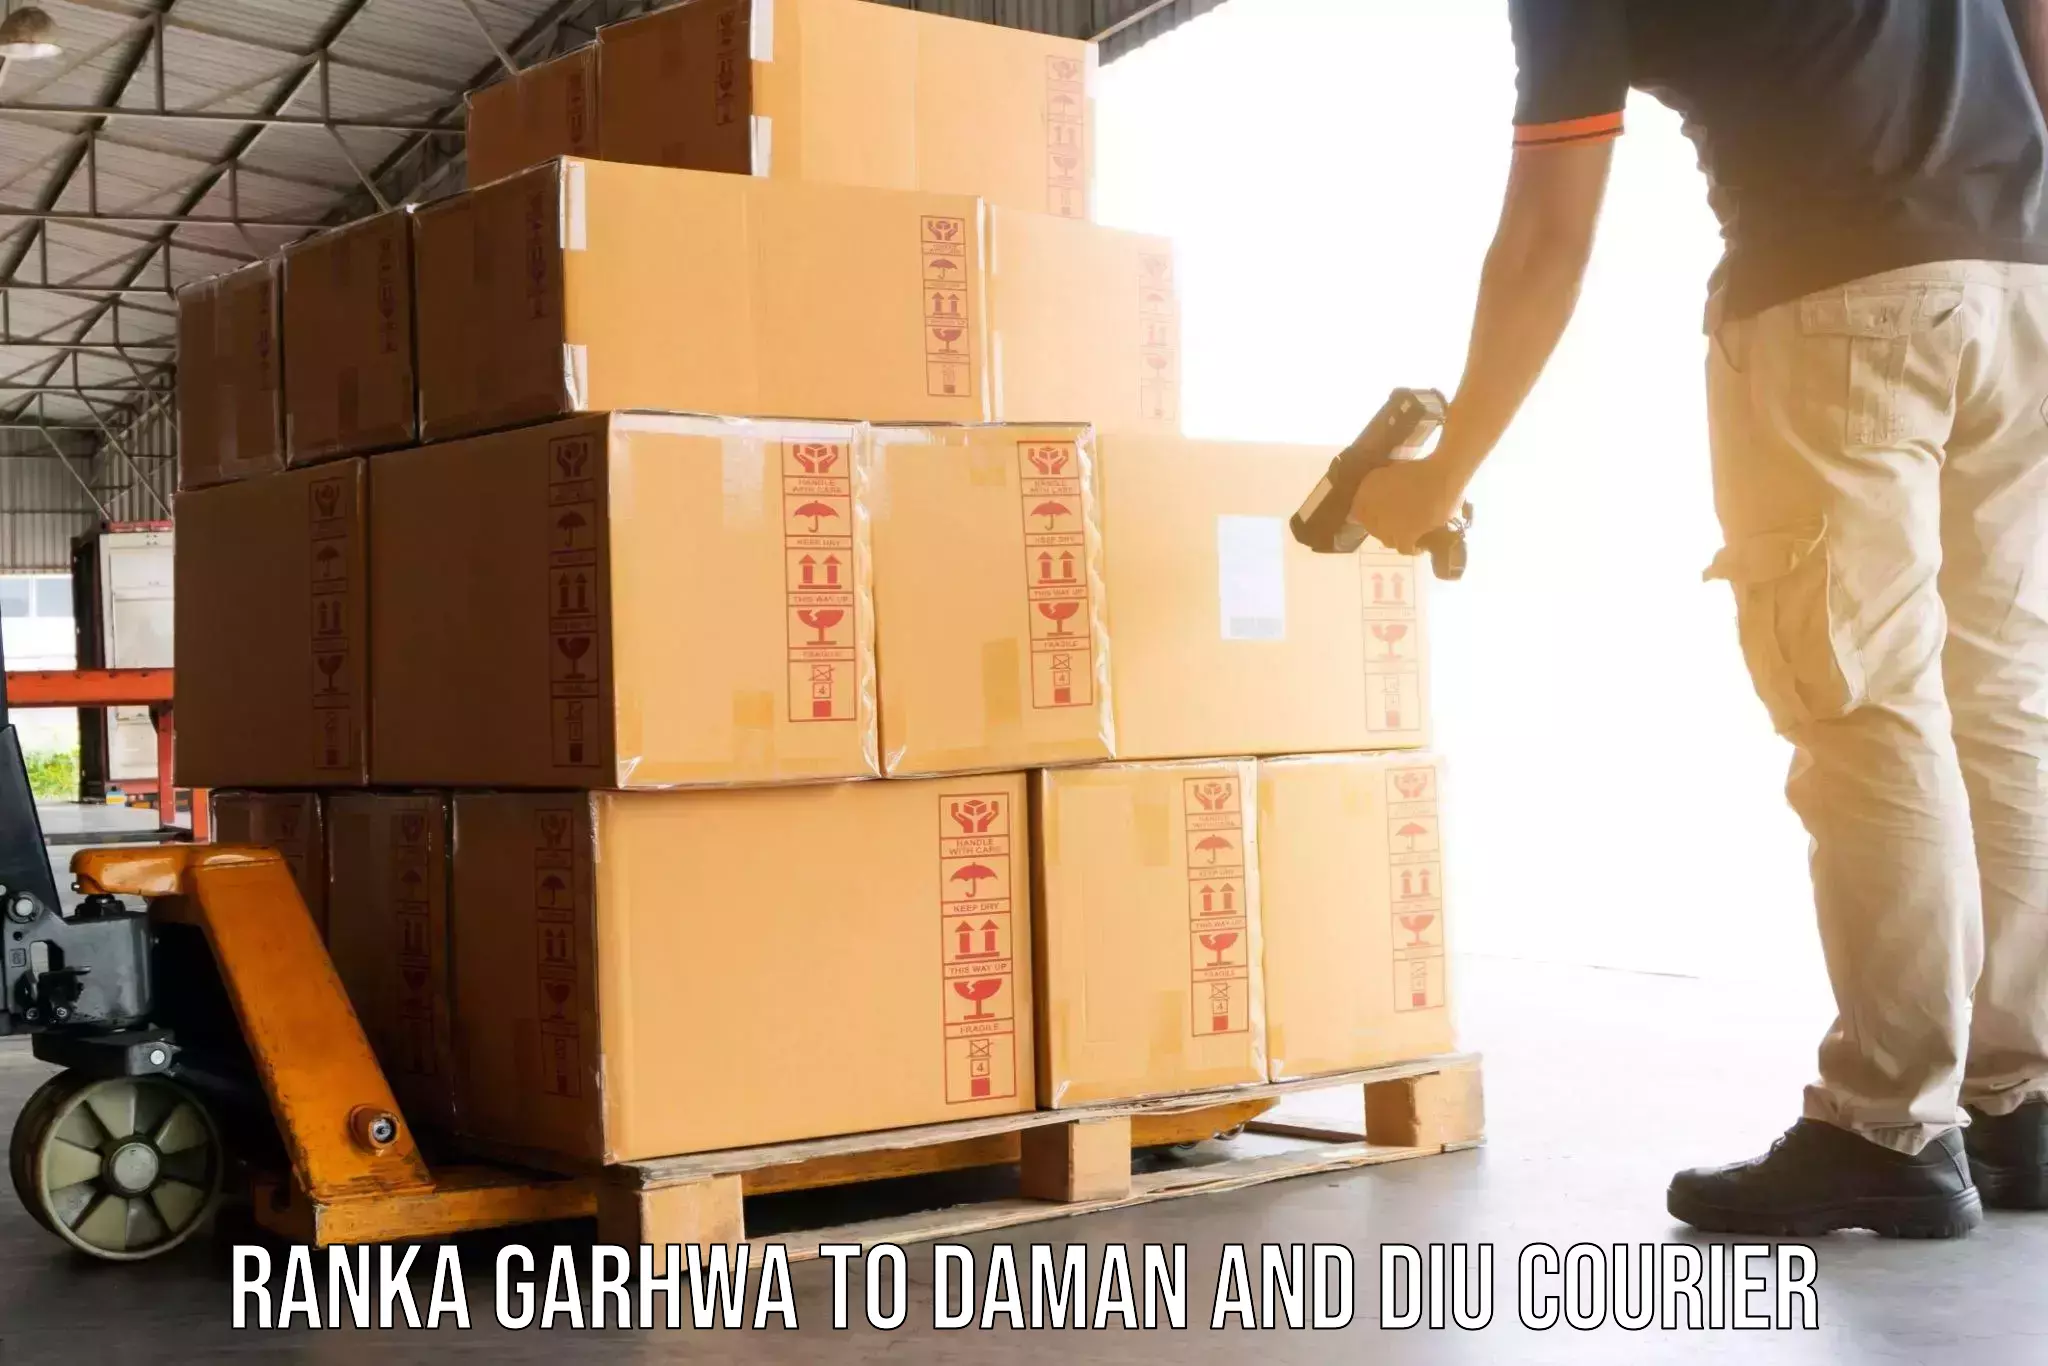 Professional moving company Ranka Garhwa to Diu